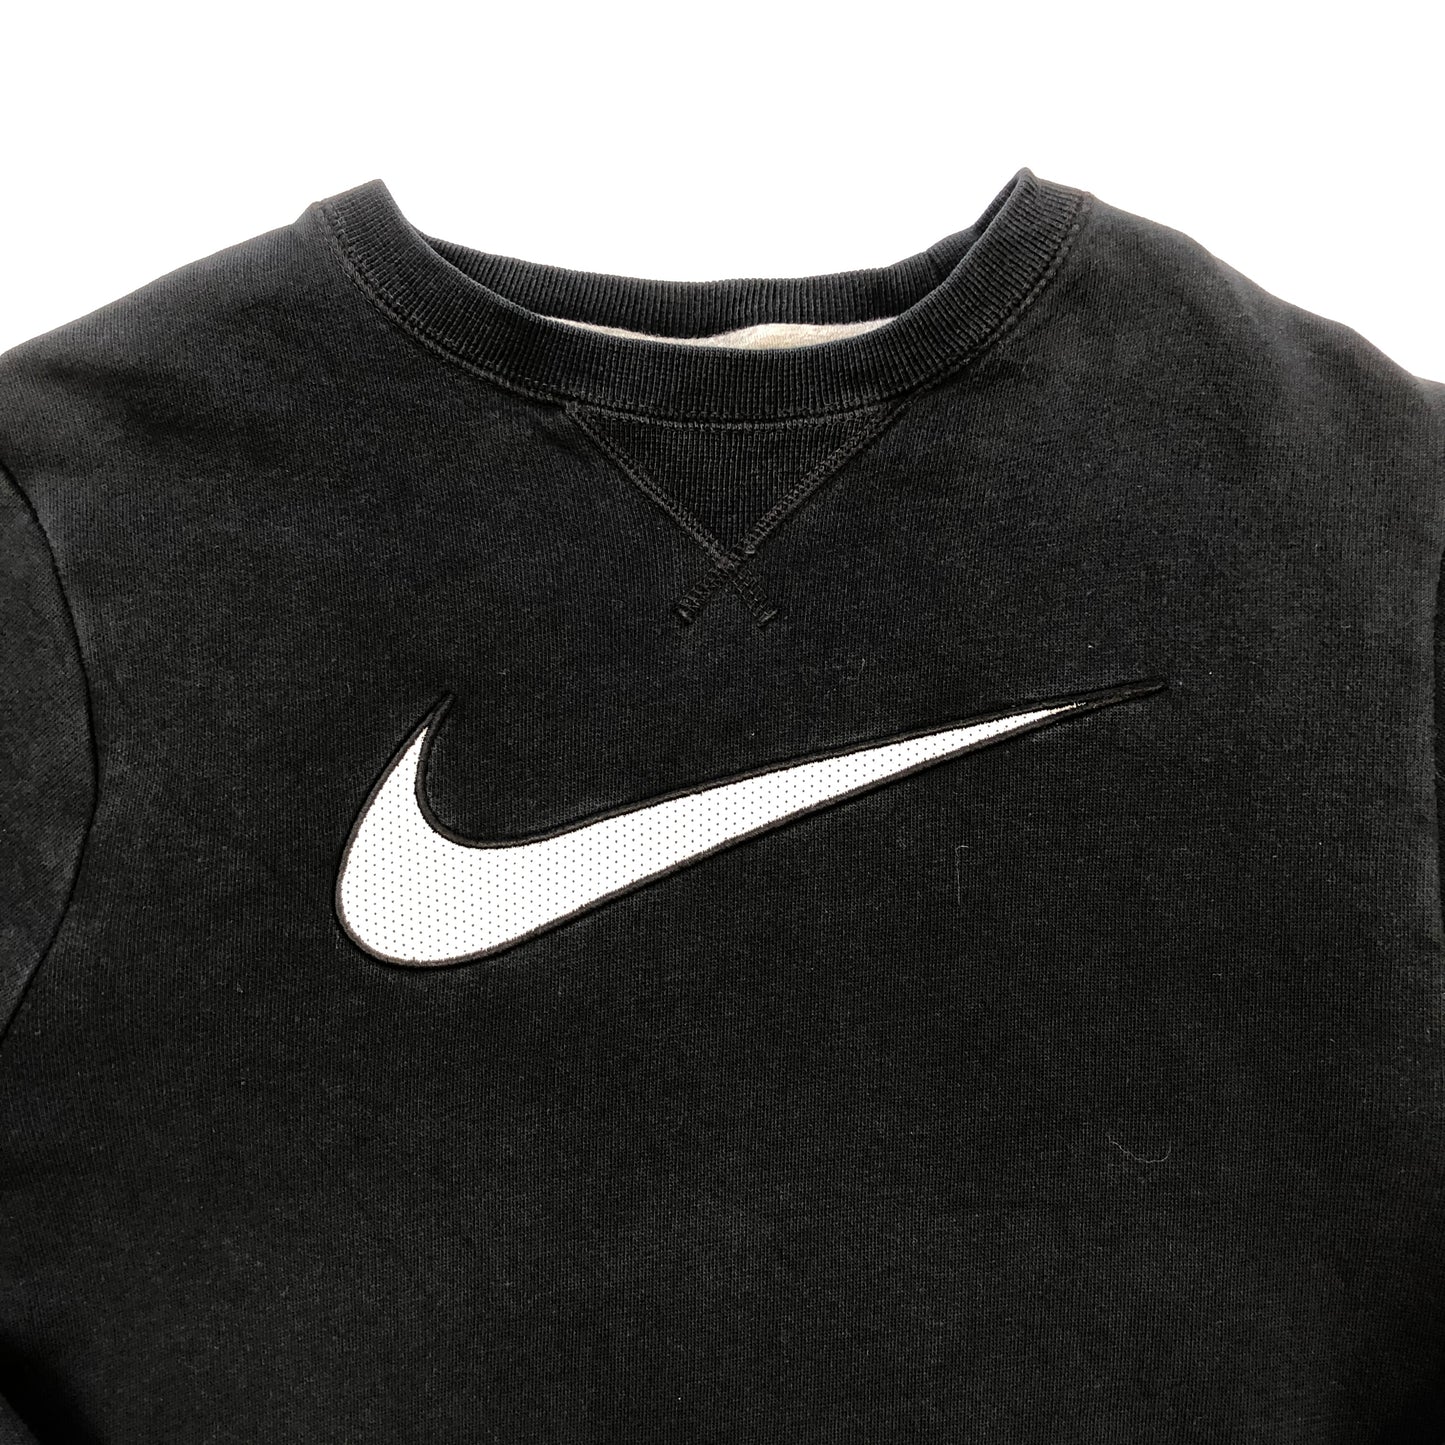 Vintage Nike Sweatshirt (12-14yrs)